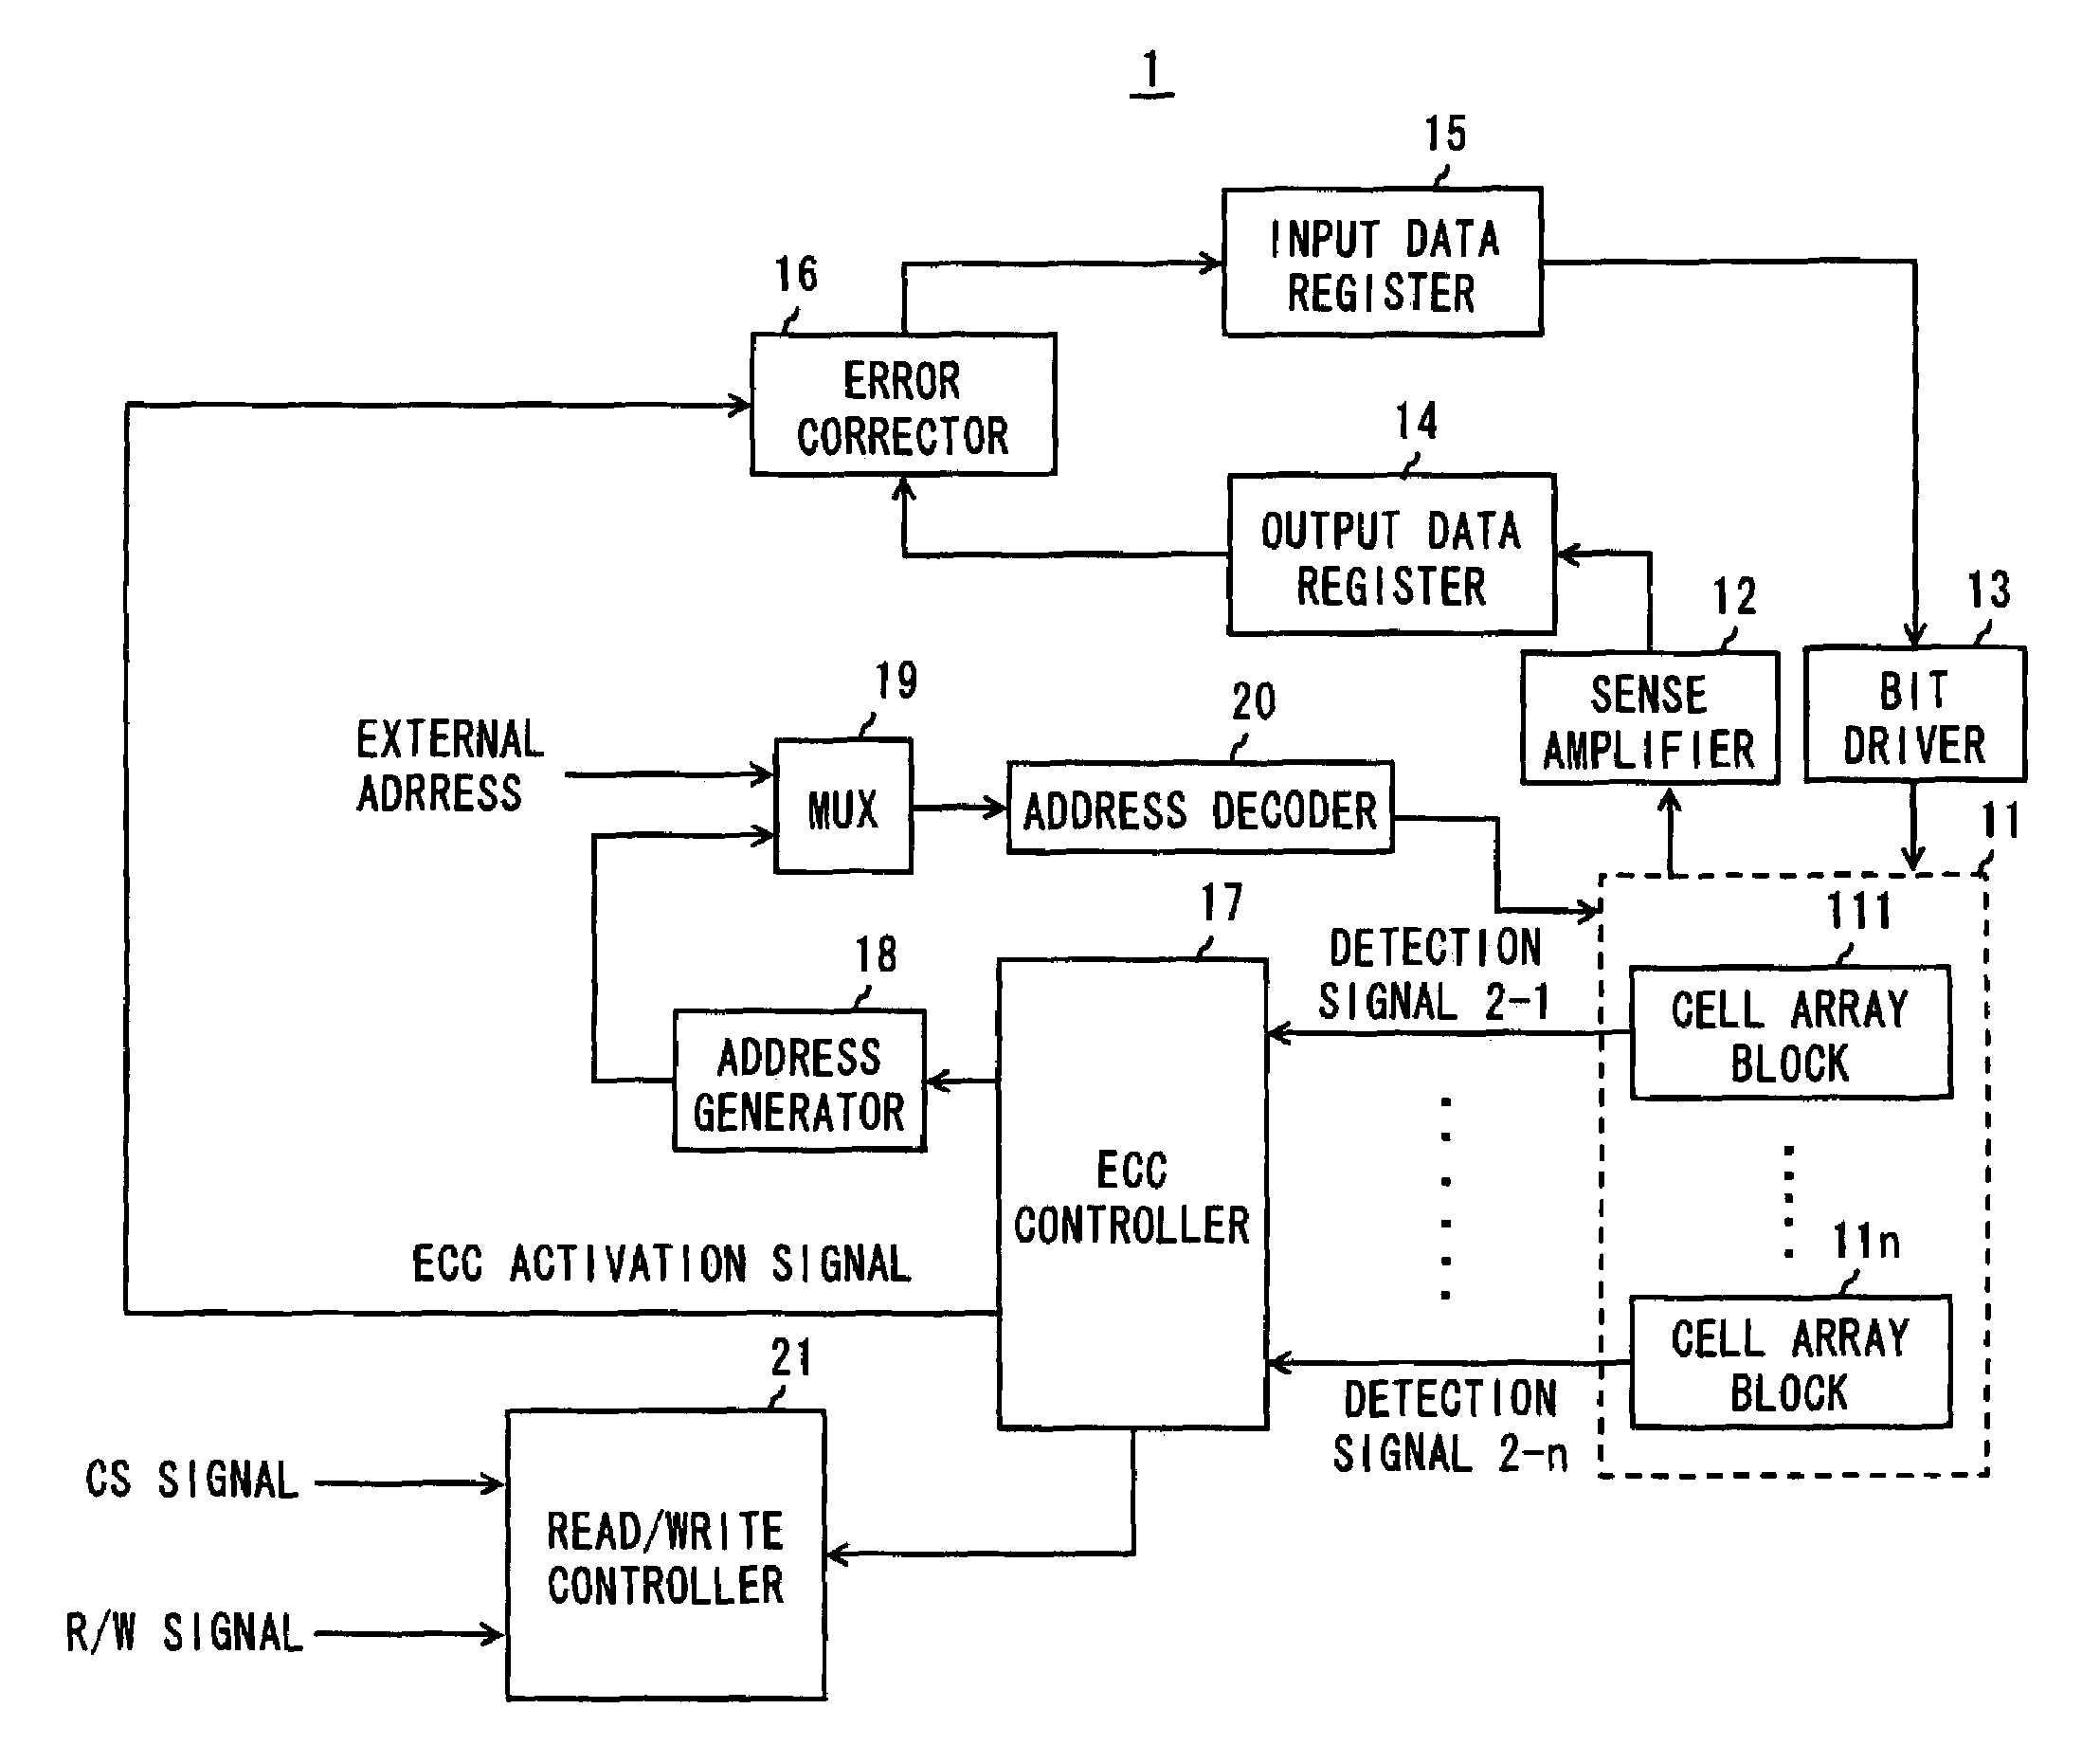 Integrated circuit apparatus